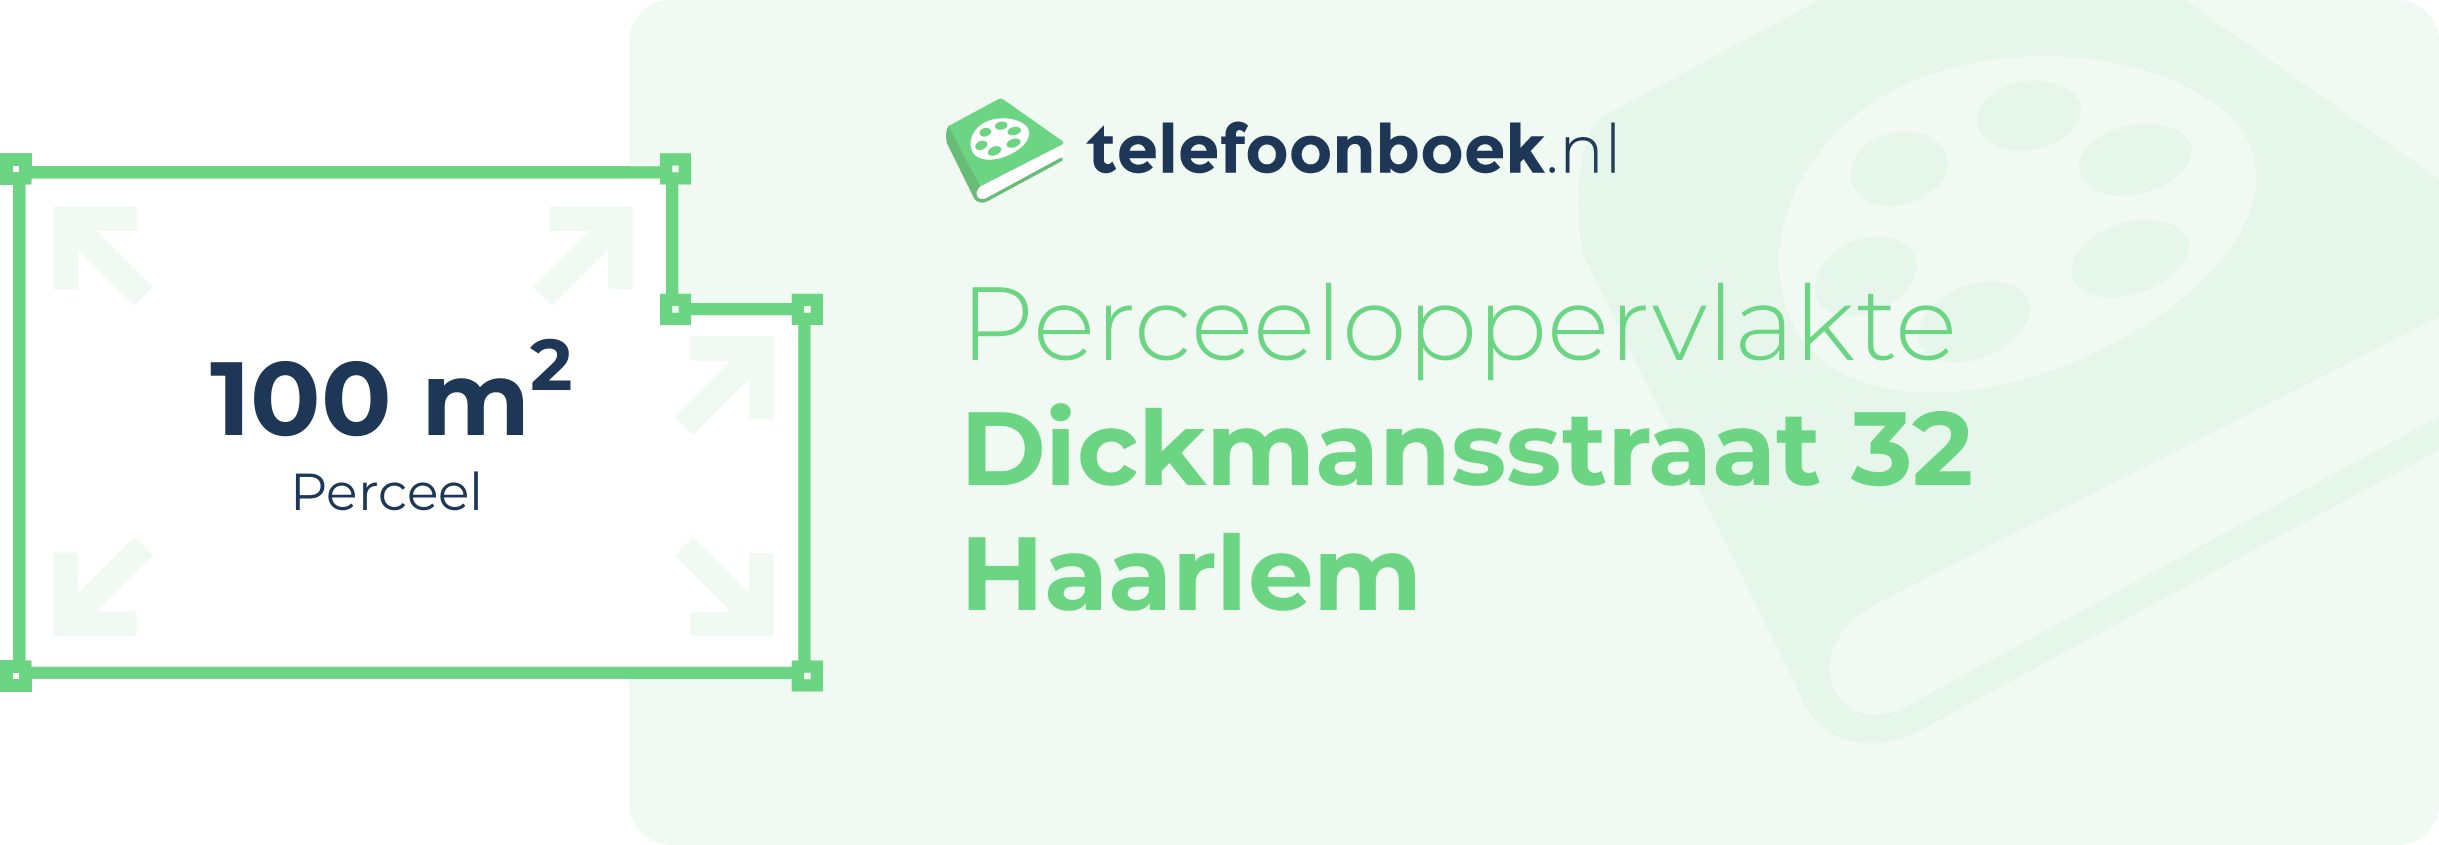 Perceeloppervlakte Dickmansstraat 32 Haarlem